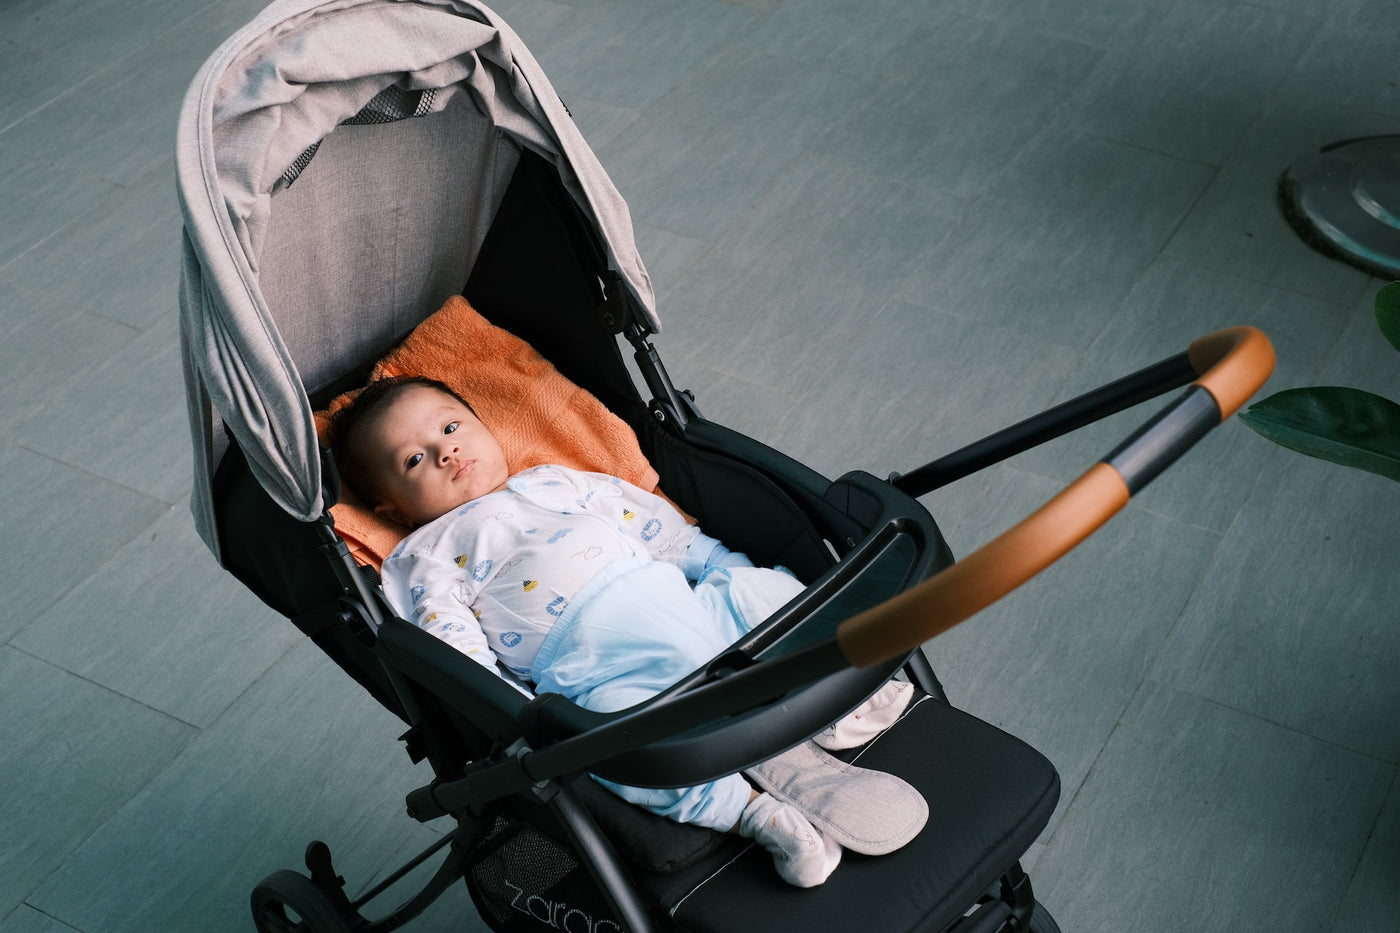 Stroller dilemmas not just for first time parents